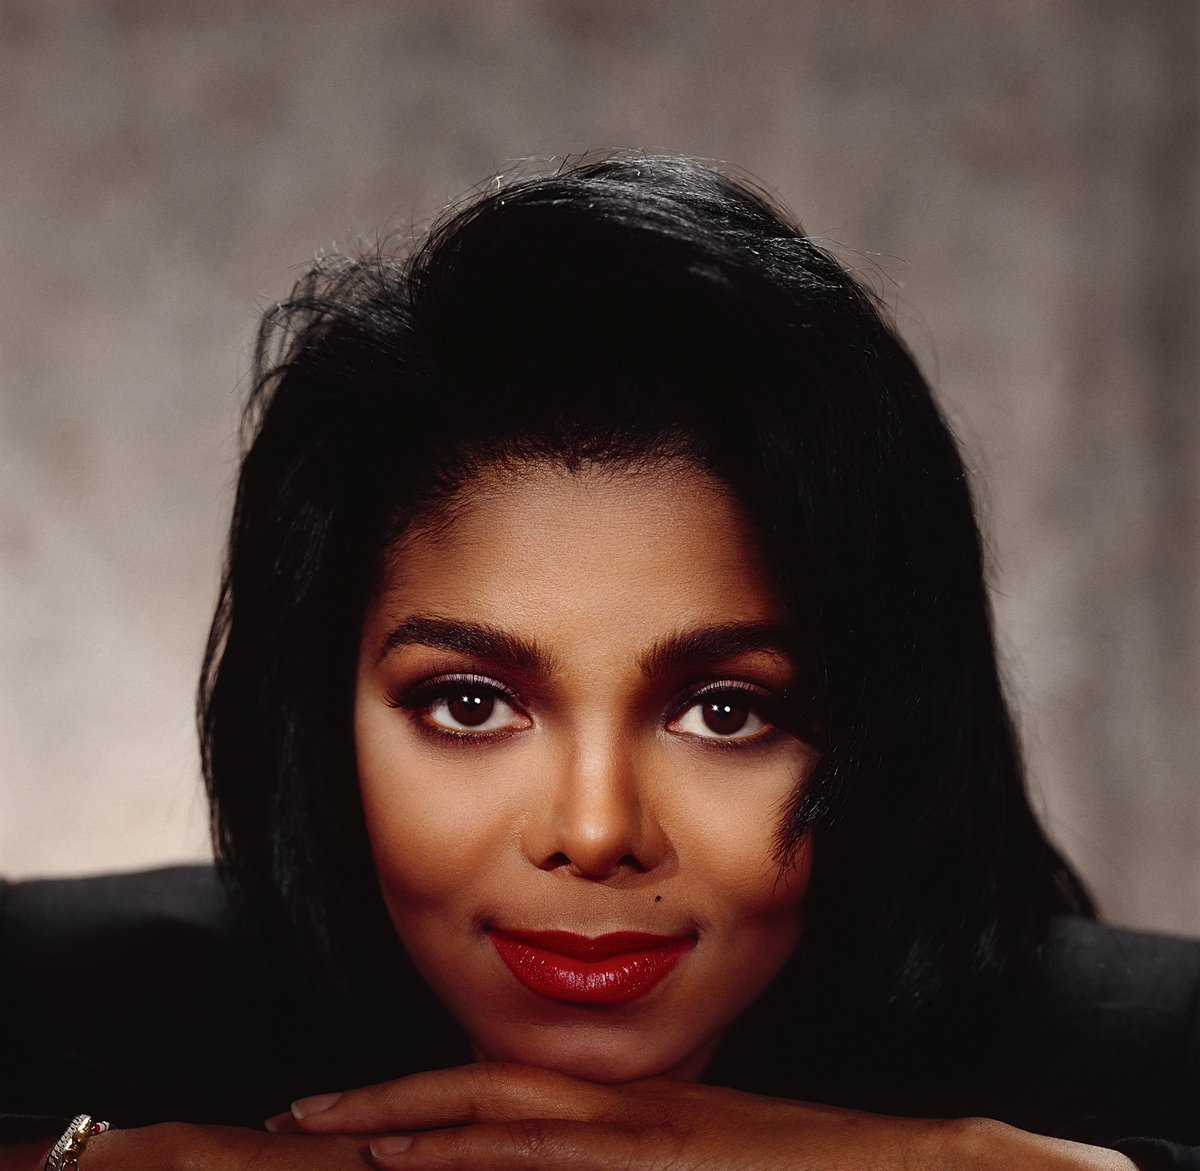 📸 | Janet Jackson photographed by Bonnie Schiffman (1990)